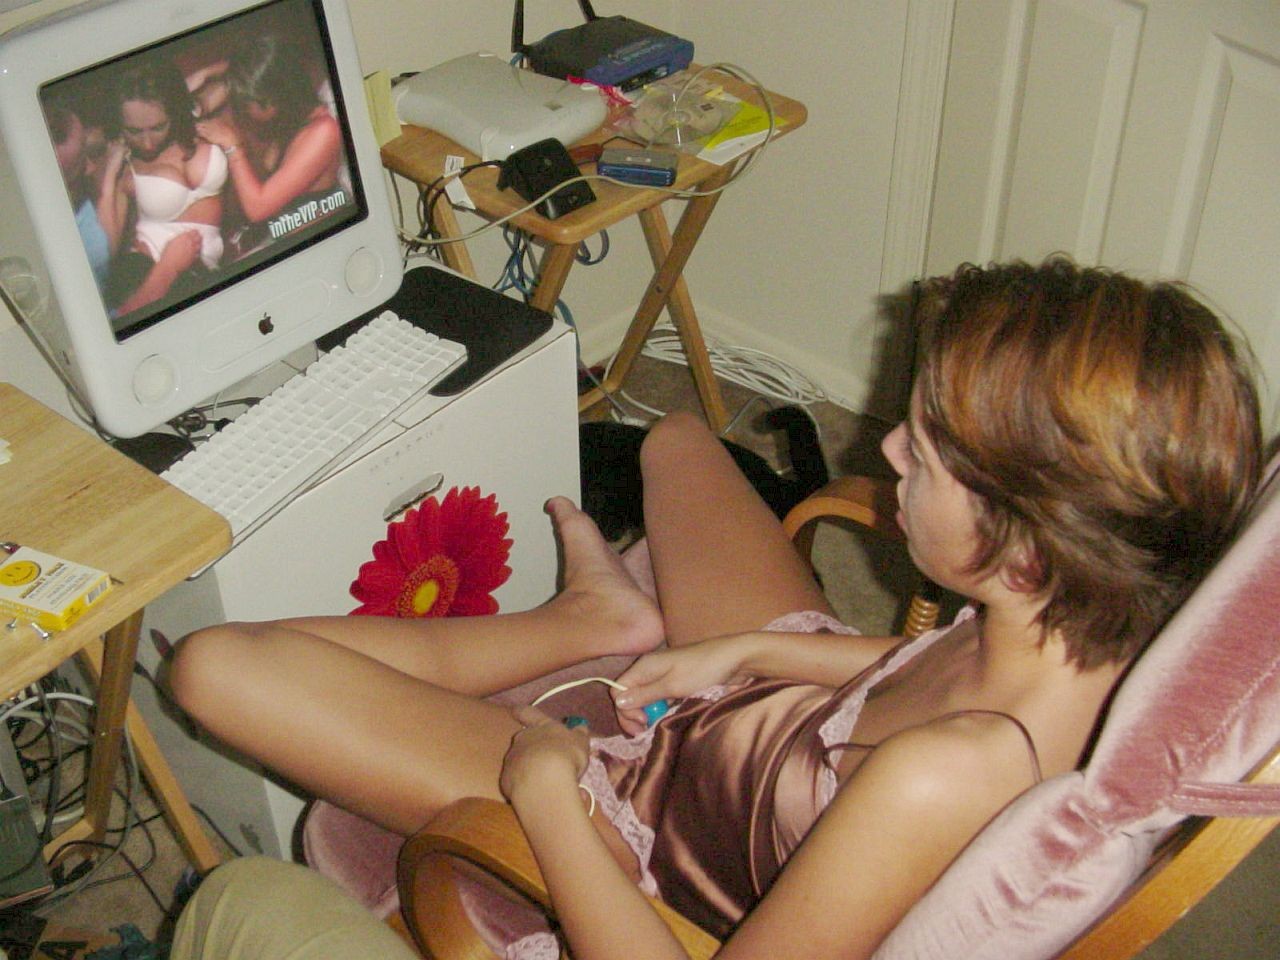 Lesbians Watching Lesbian Porn